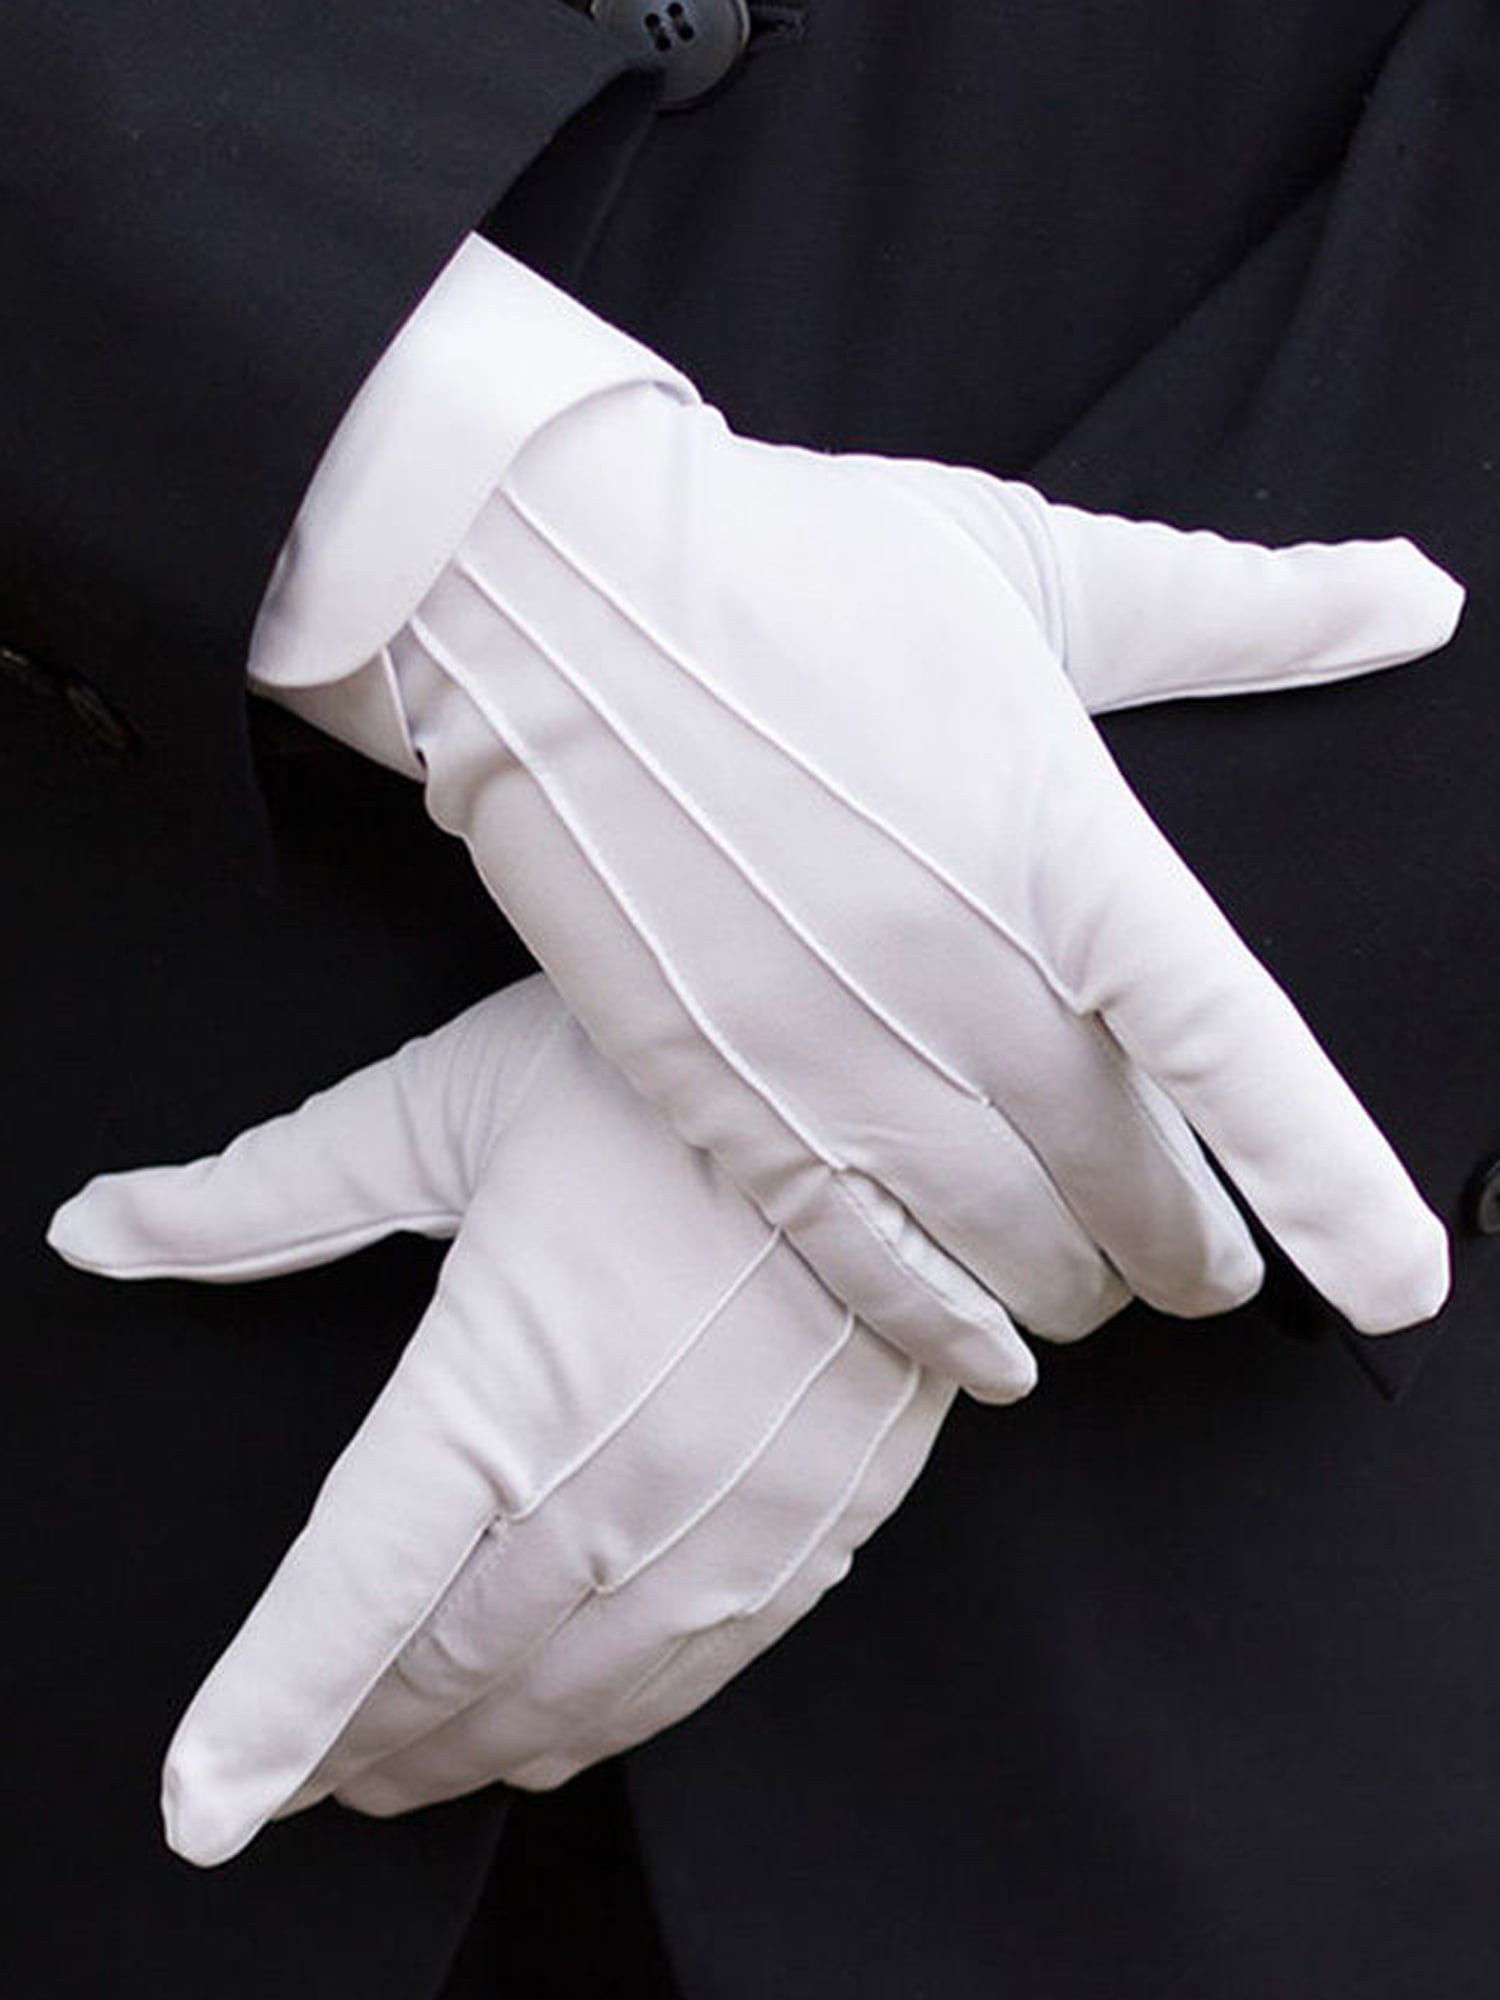 Mens Gloves Black Or White Fancy Dress Gents Male Gloves 